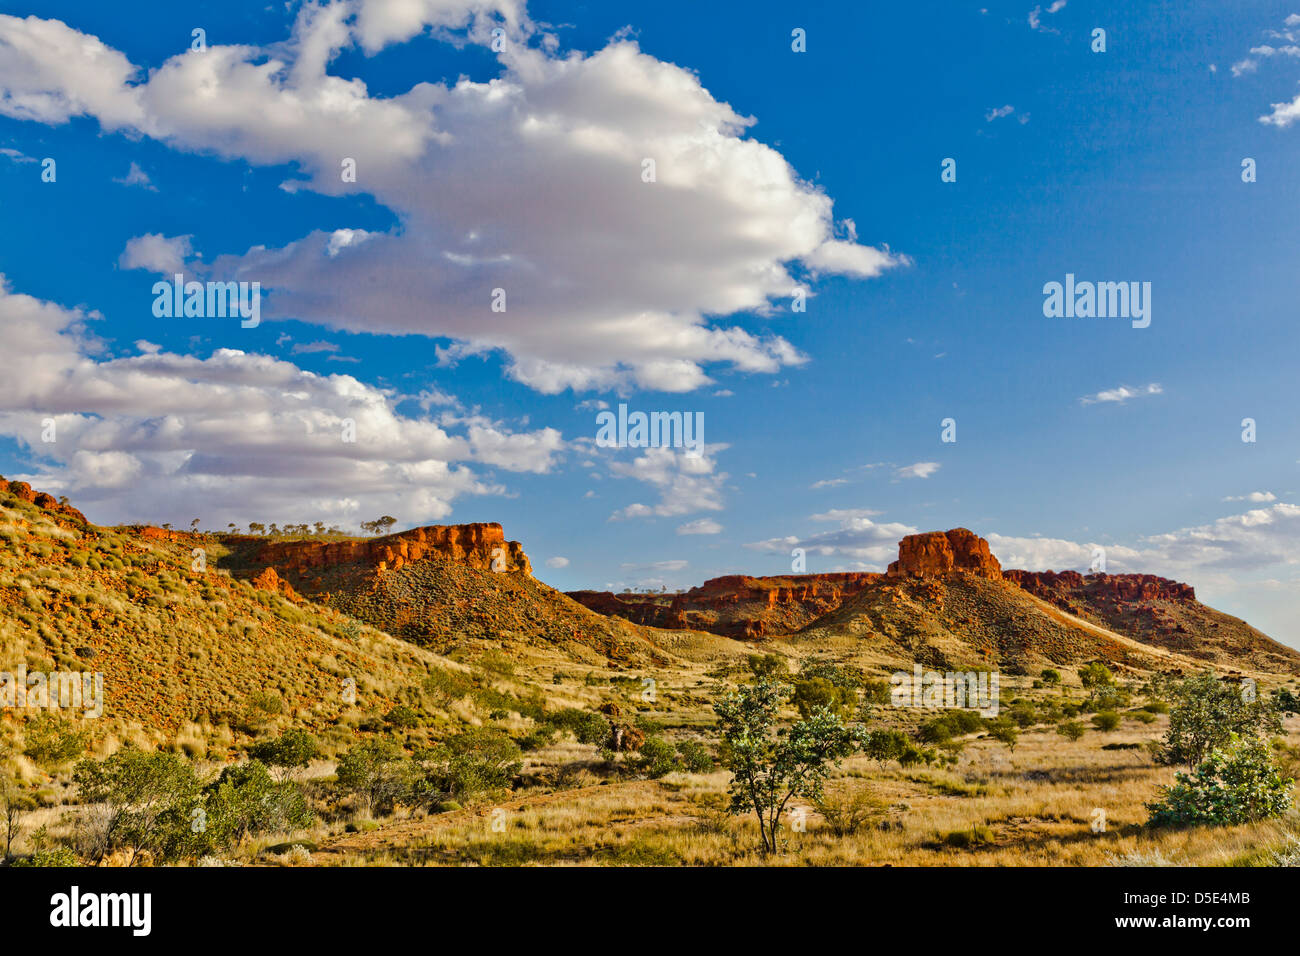 L'Australie, Australie occidentale, Kimberley, Great Northern Highway près de Fitzroy Crossing Banque D'Images